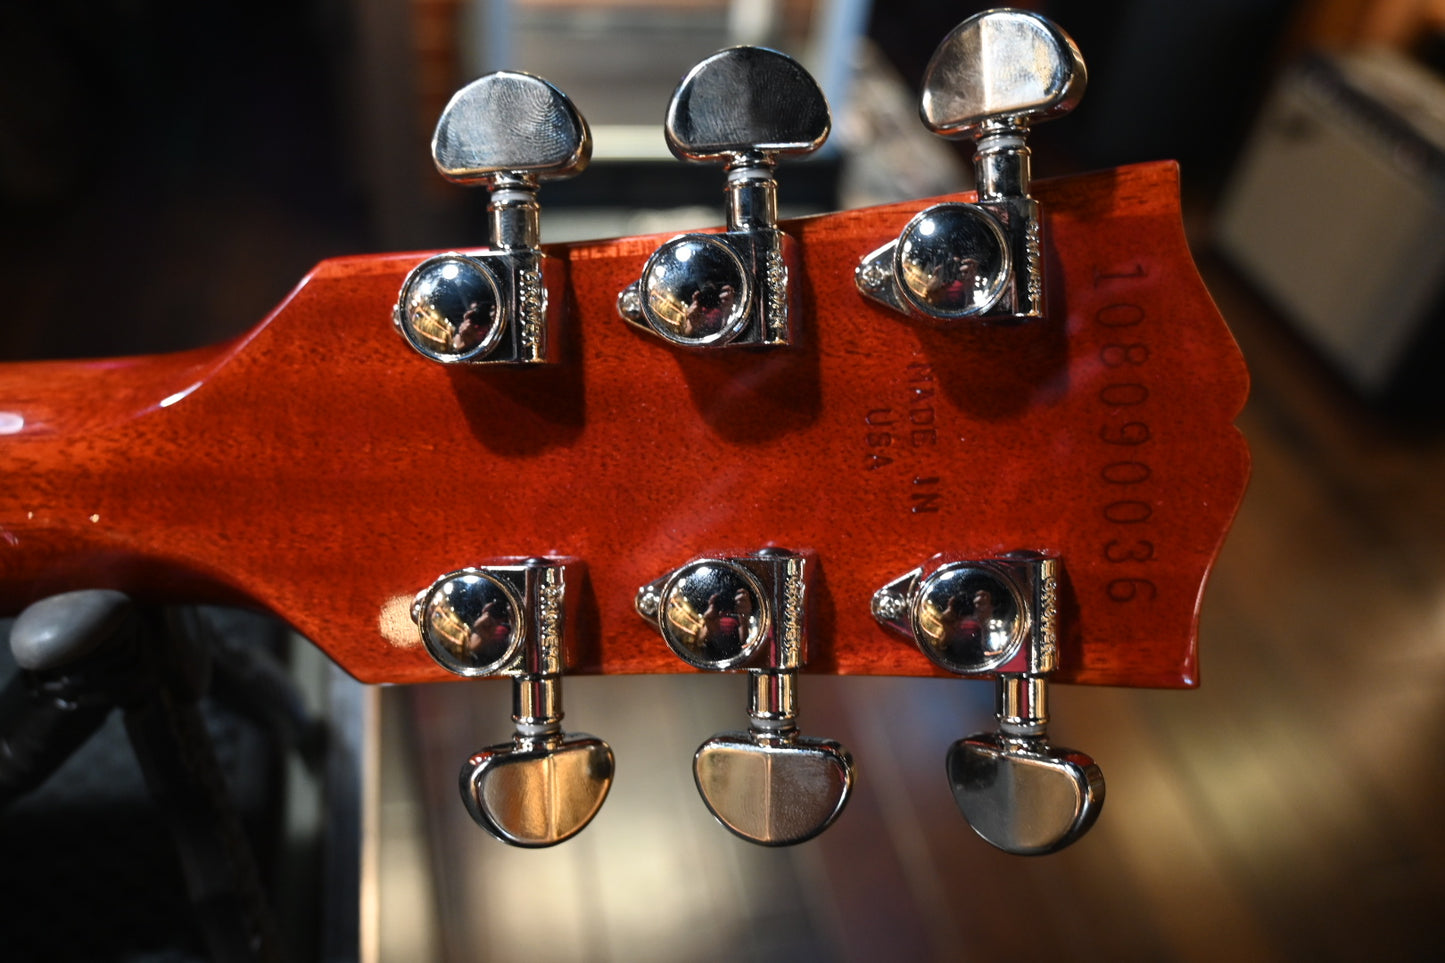 Gibson Les Paul Standard ‘60s 2019 - Bourbon Burst Guitar #0036 - Danville Music